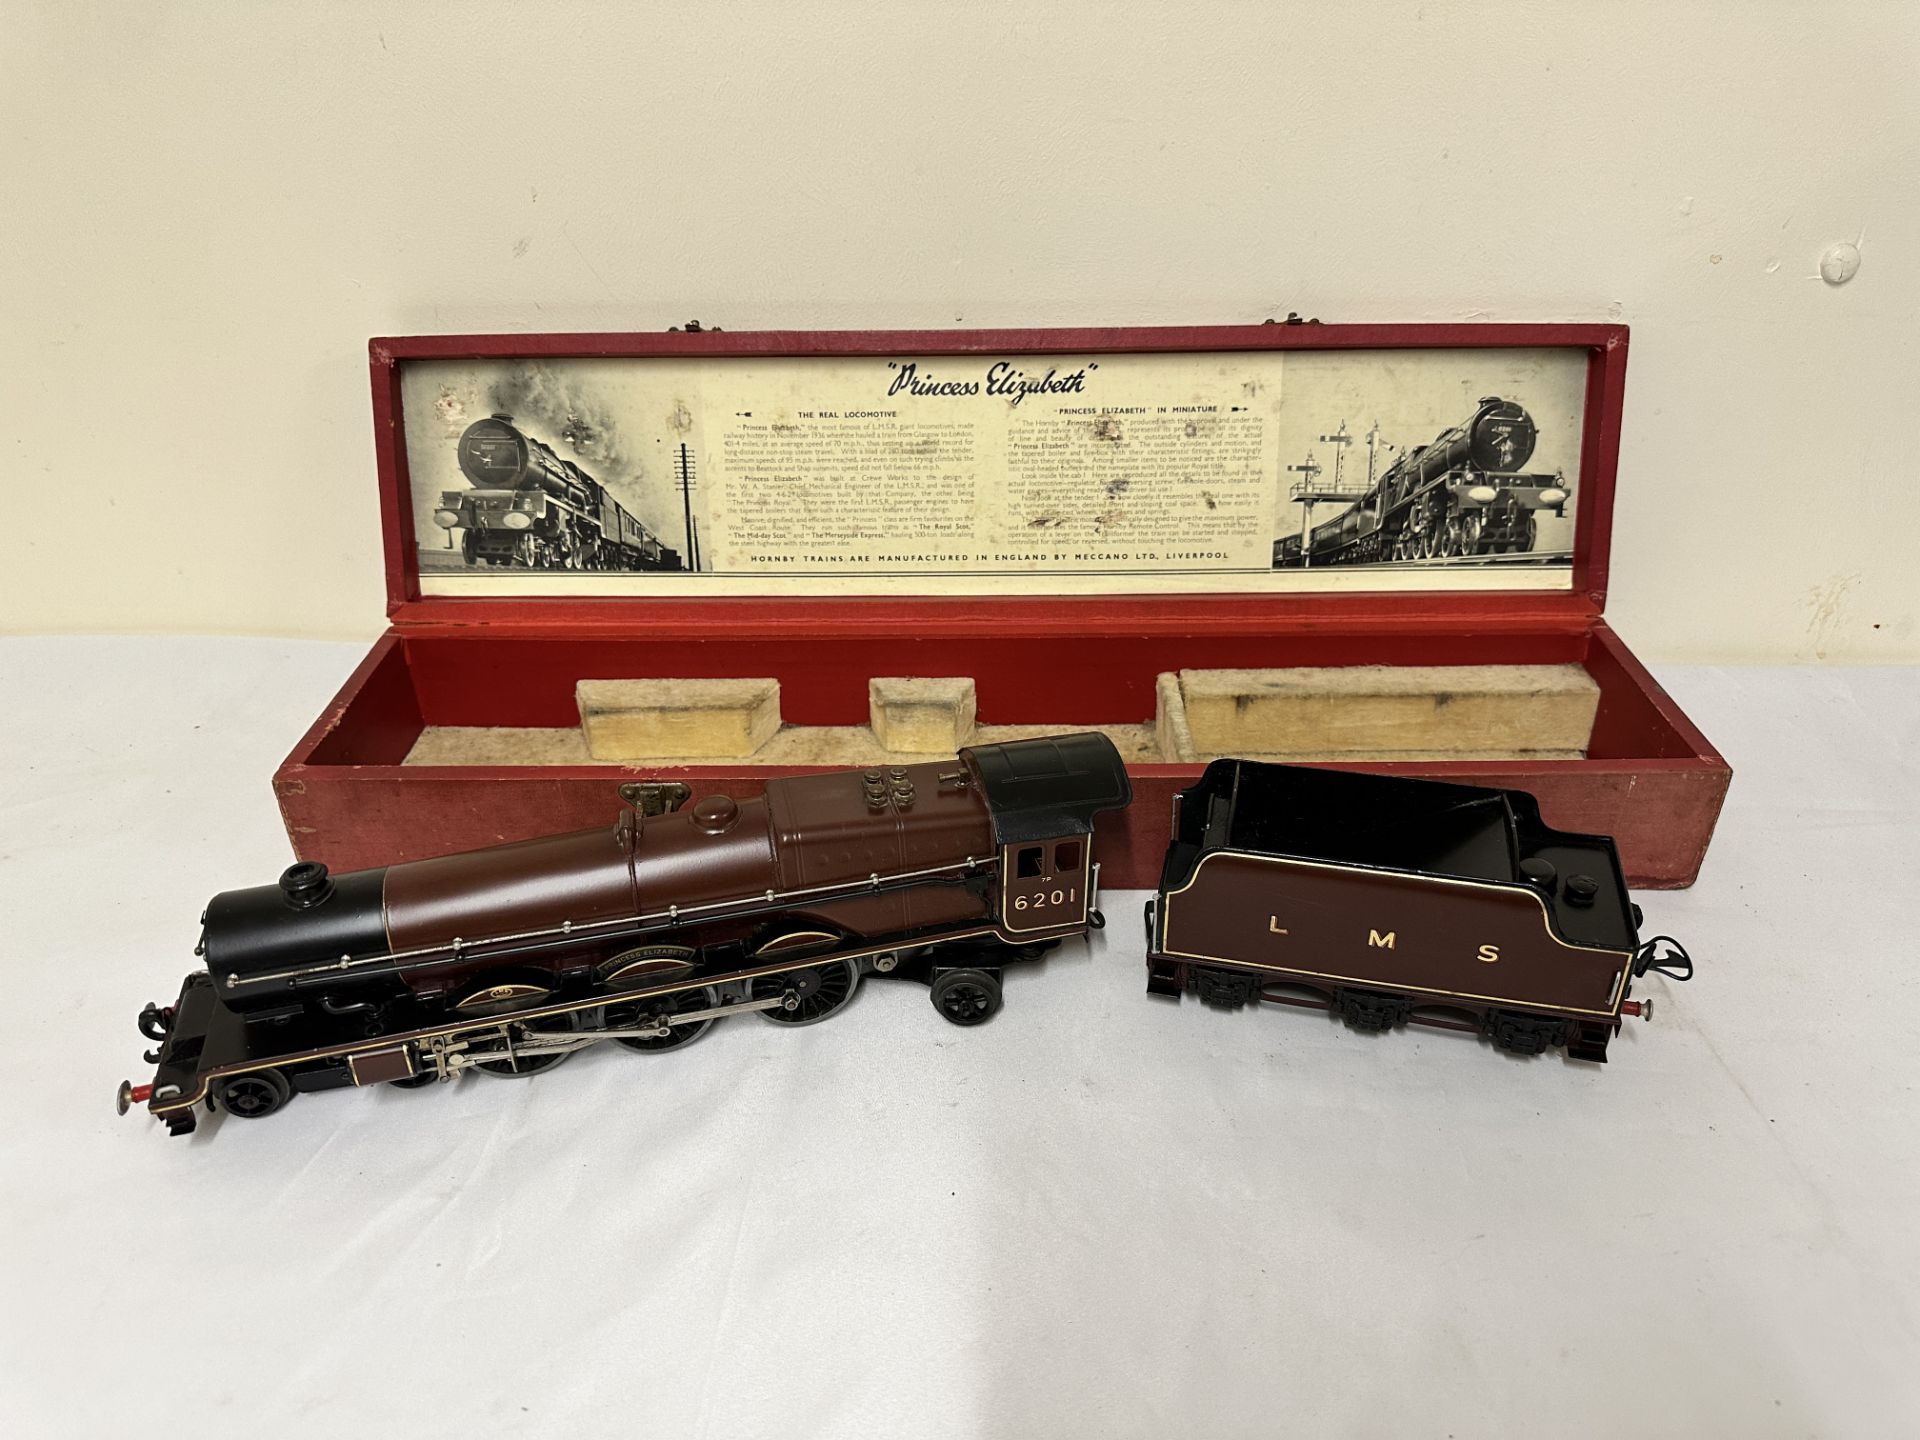 Hornby 0 gauge electric locomotive "The Princess Elizabeth" with tender, in original box.